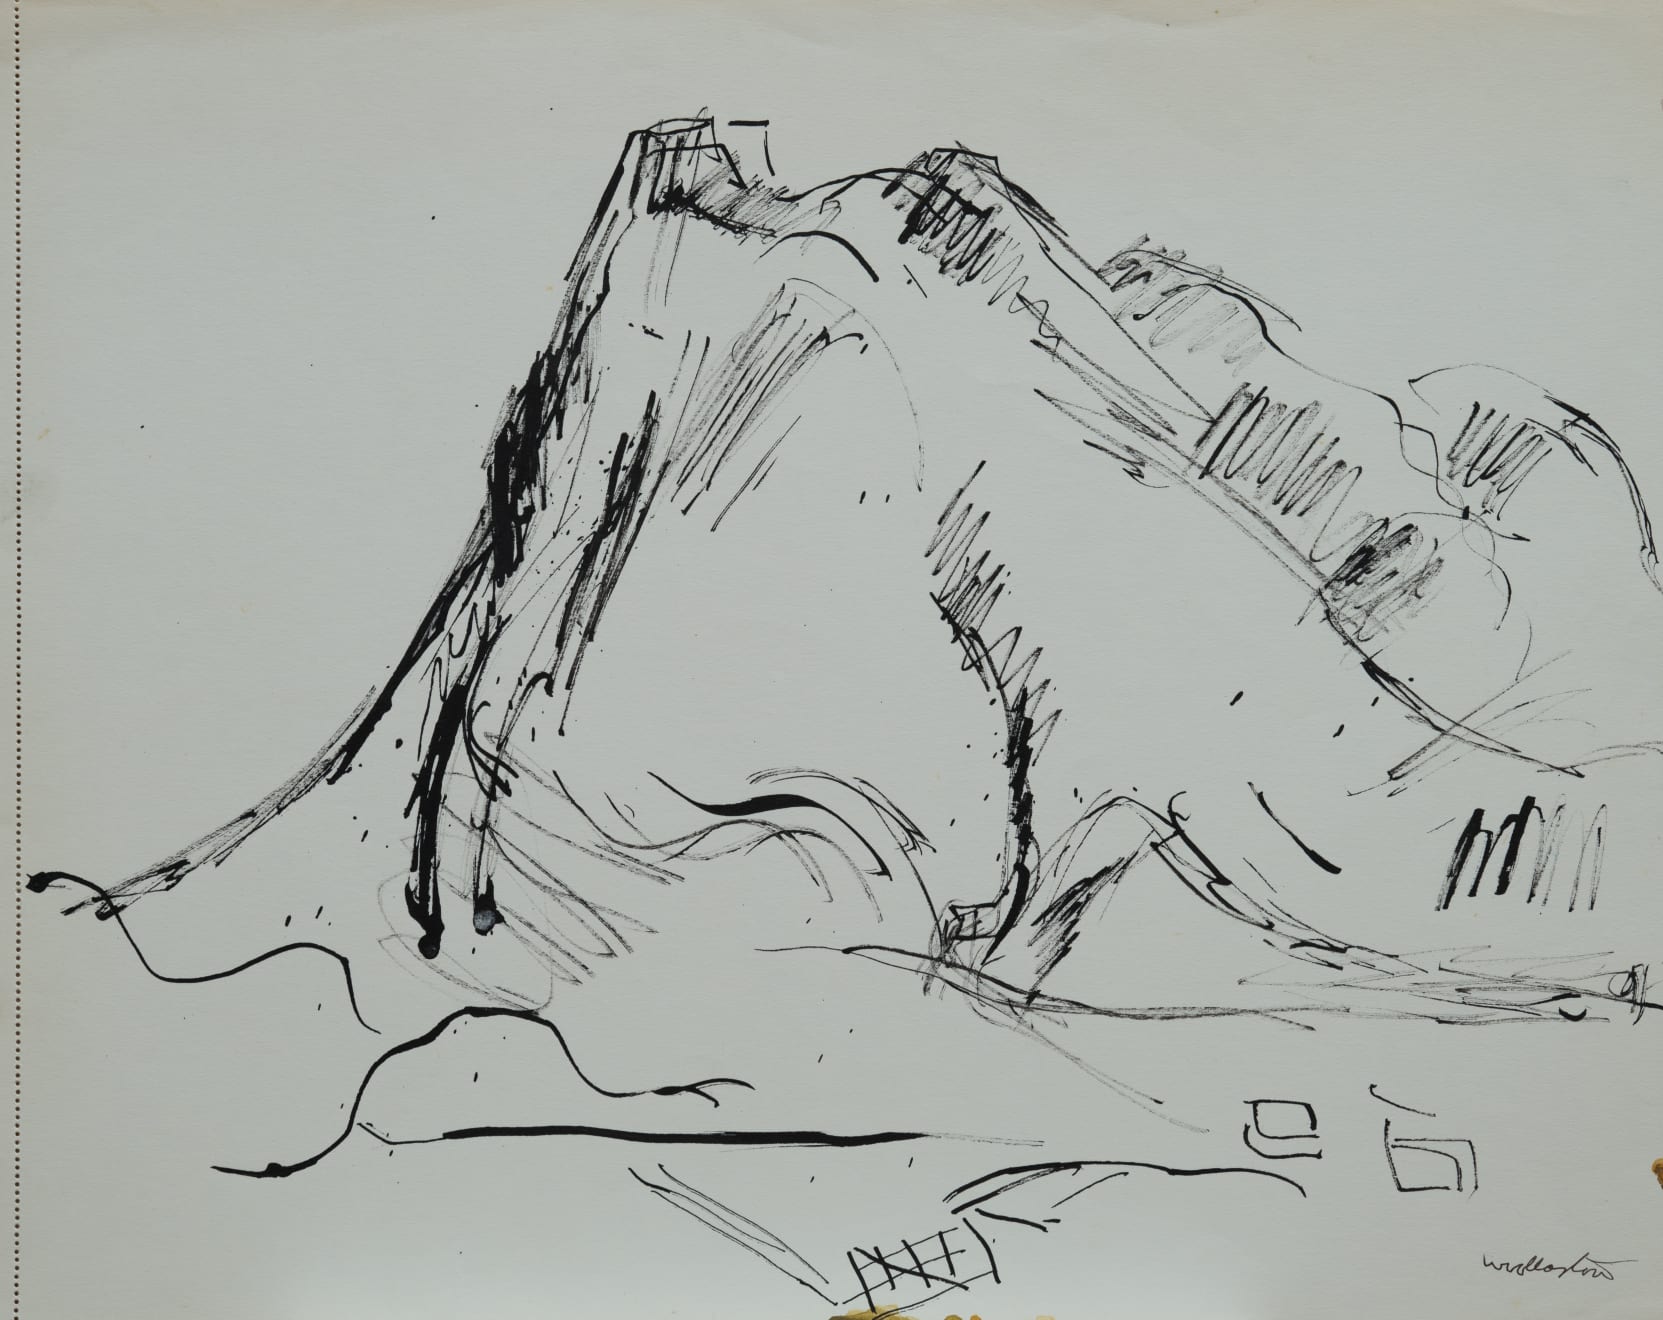 Toss Woollaston, Mt Edgcumbe (Kawerau), 1966